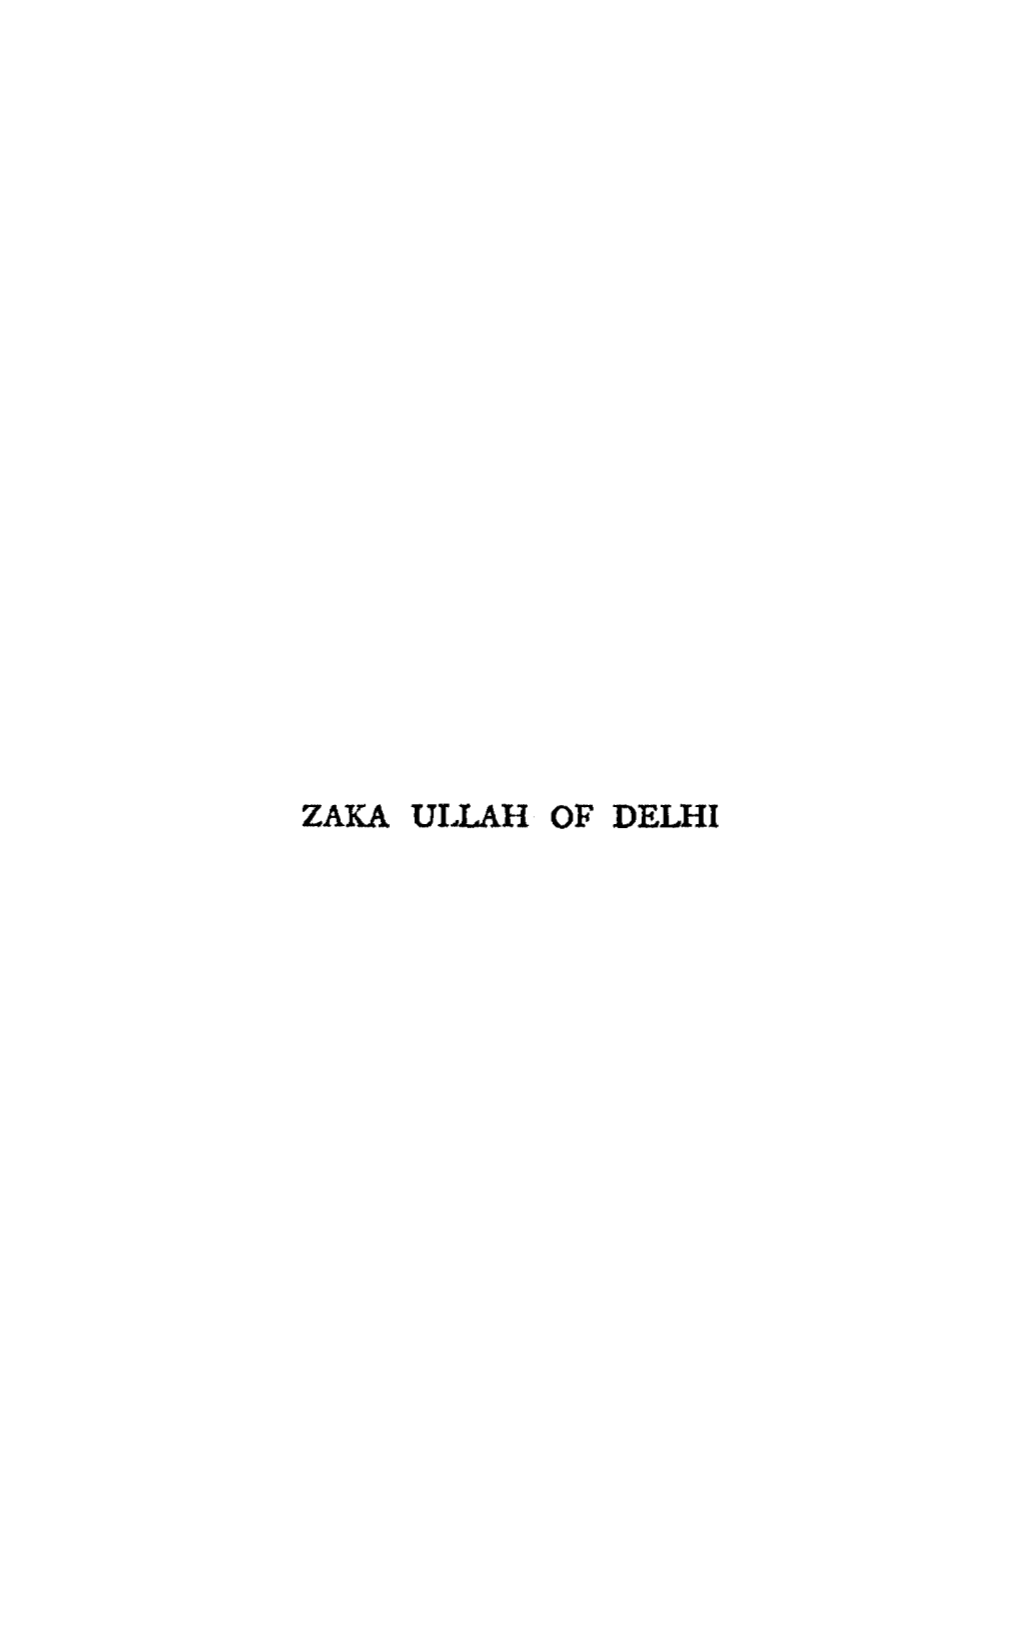 Zaka Ullah· of Delhi London Agents 8111Pein Karssali